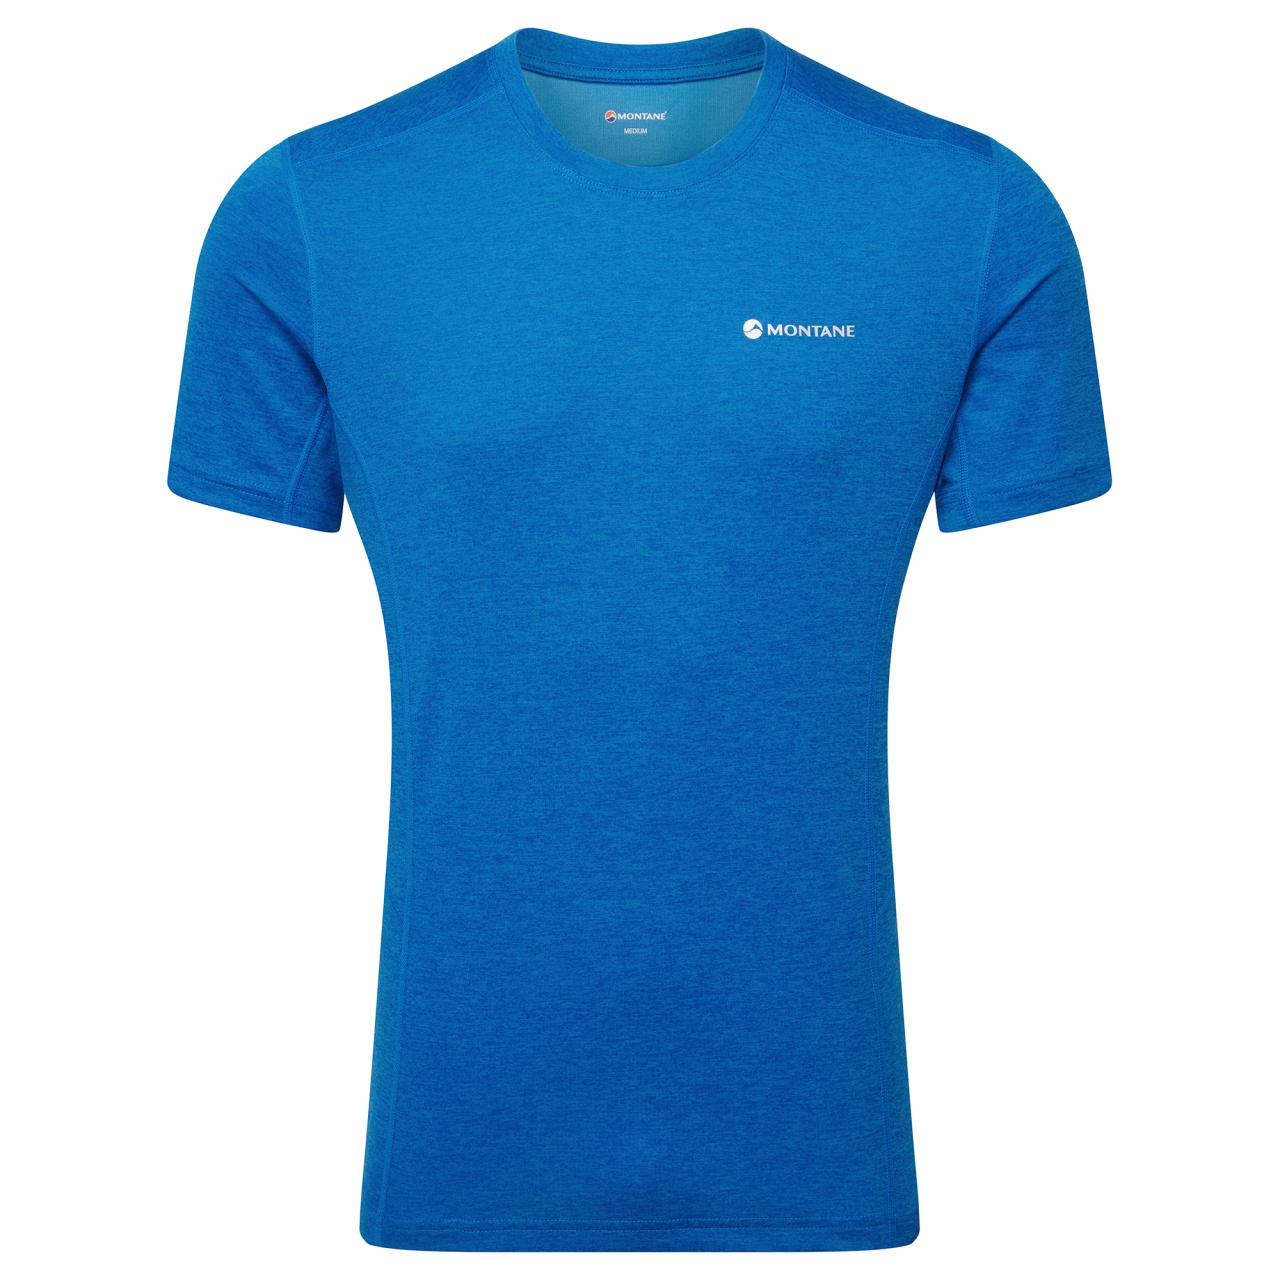 Montane pánské triko Dart T-Shirt Barva: neptune blue, Velikost: XS